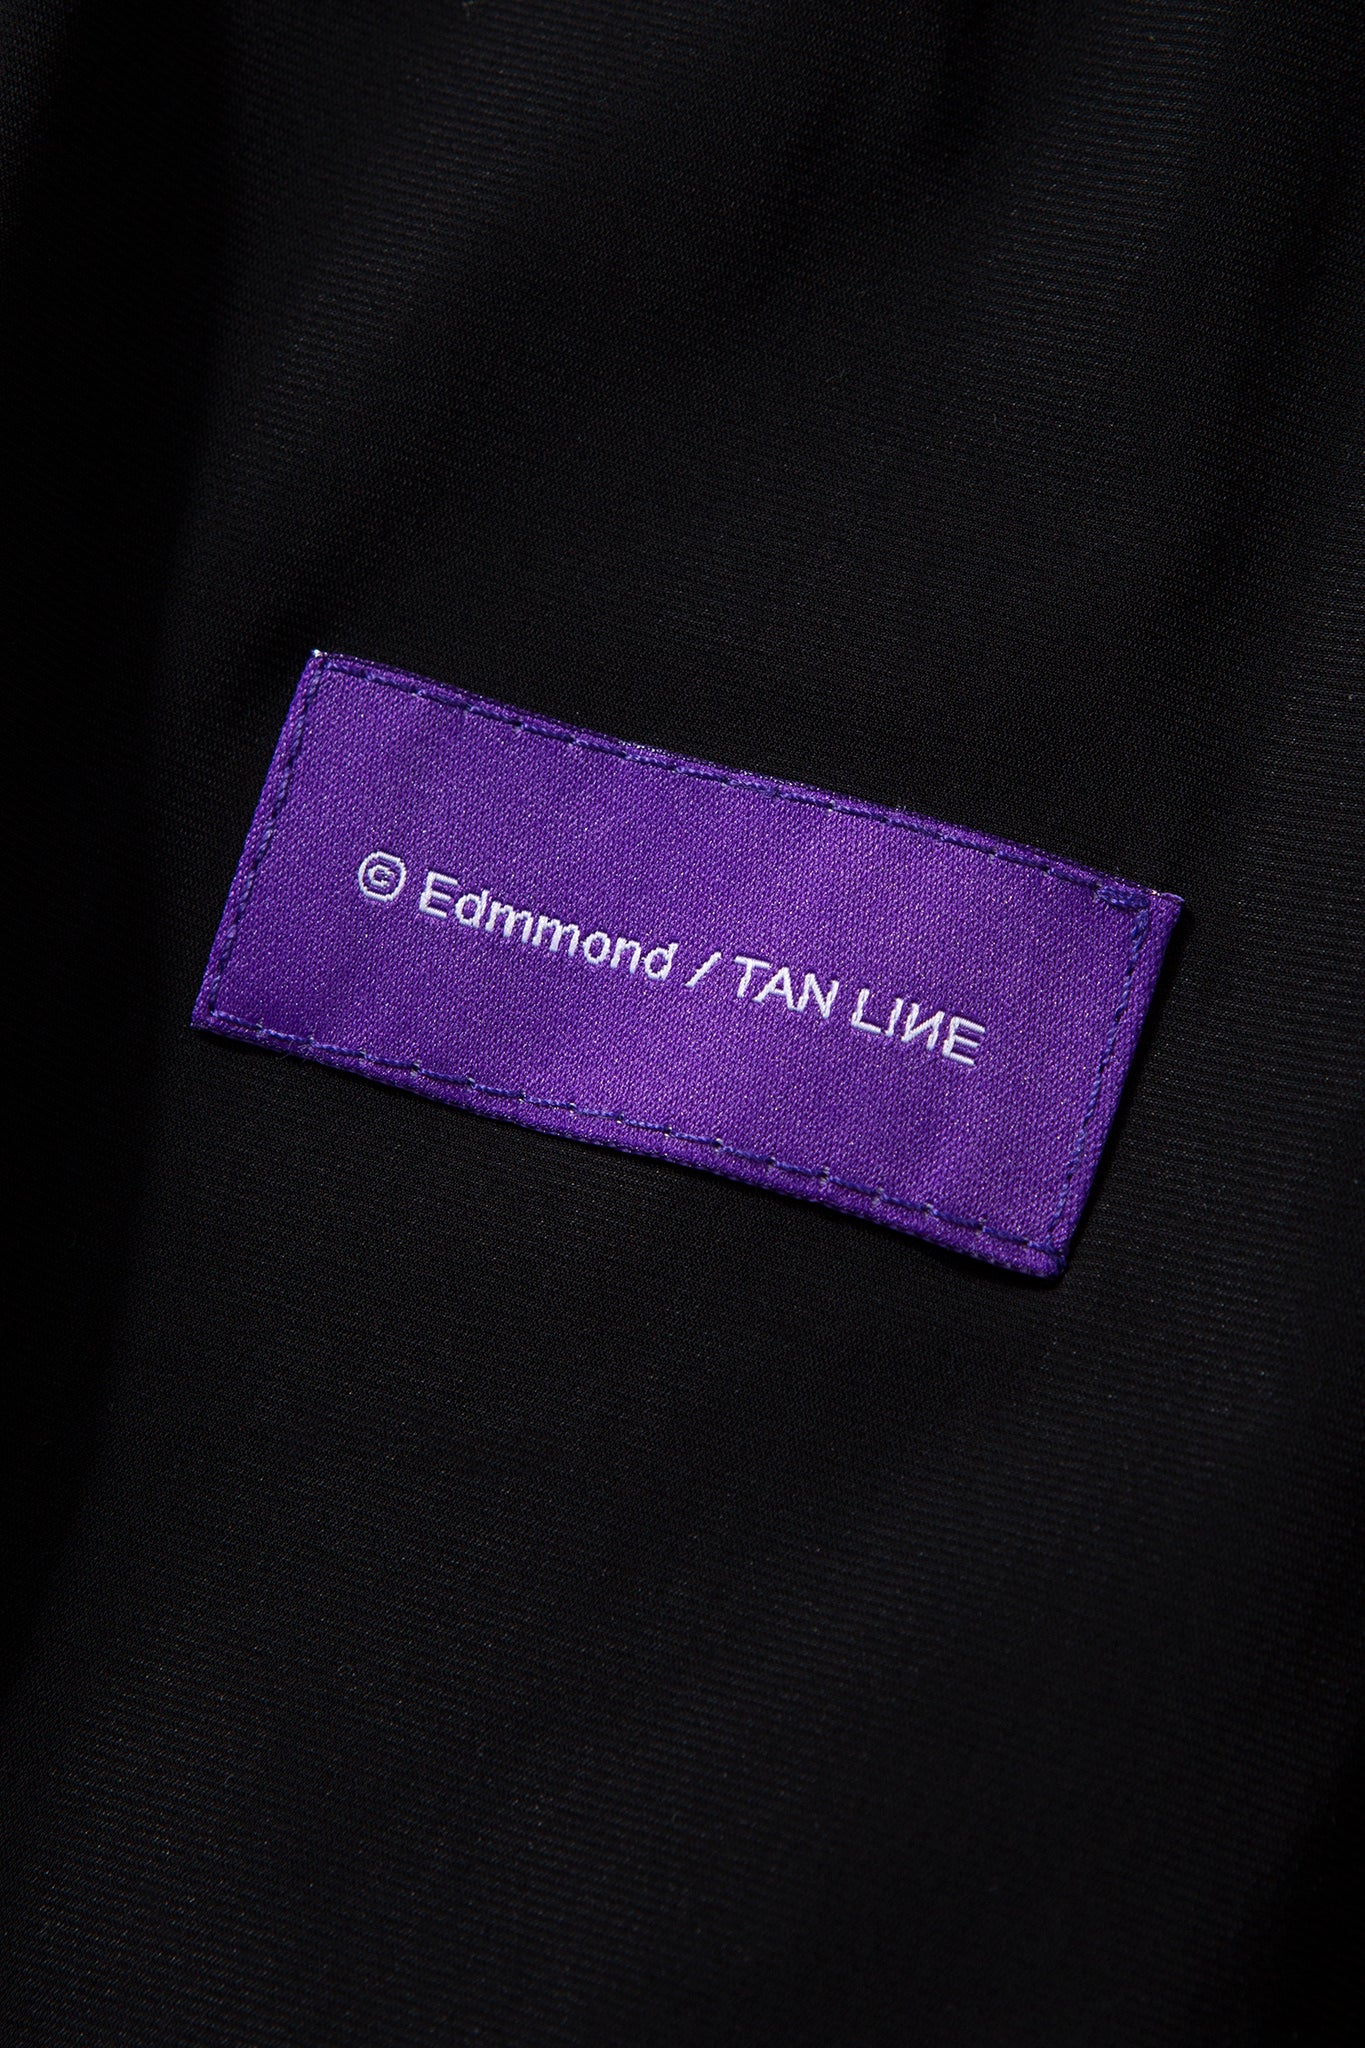 Edmmond & Tan Line Finest SL jersey ~ Black